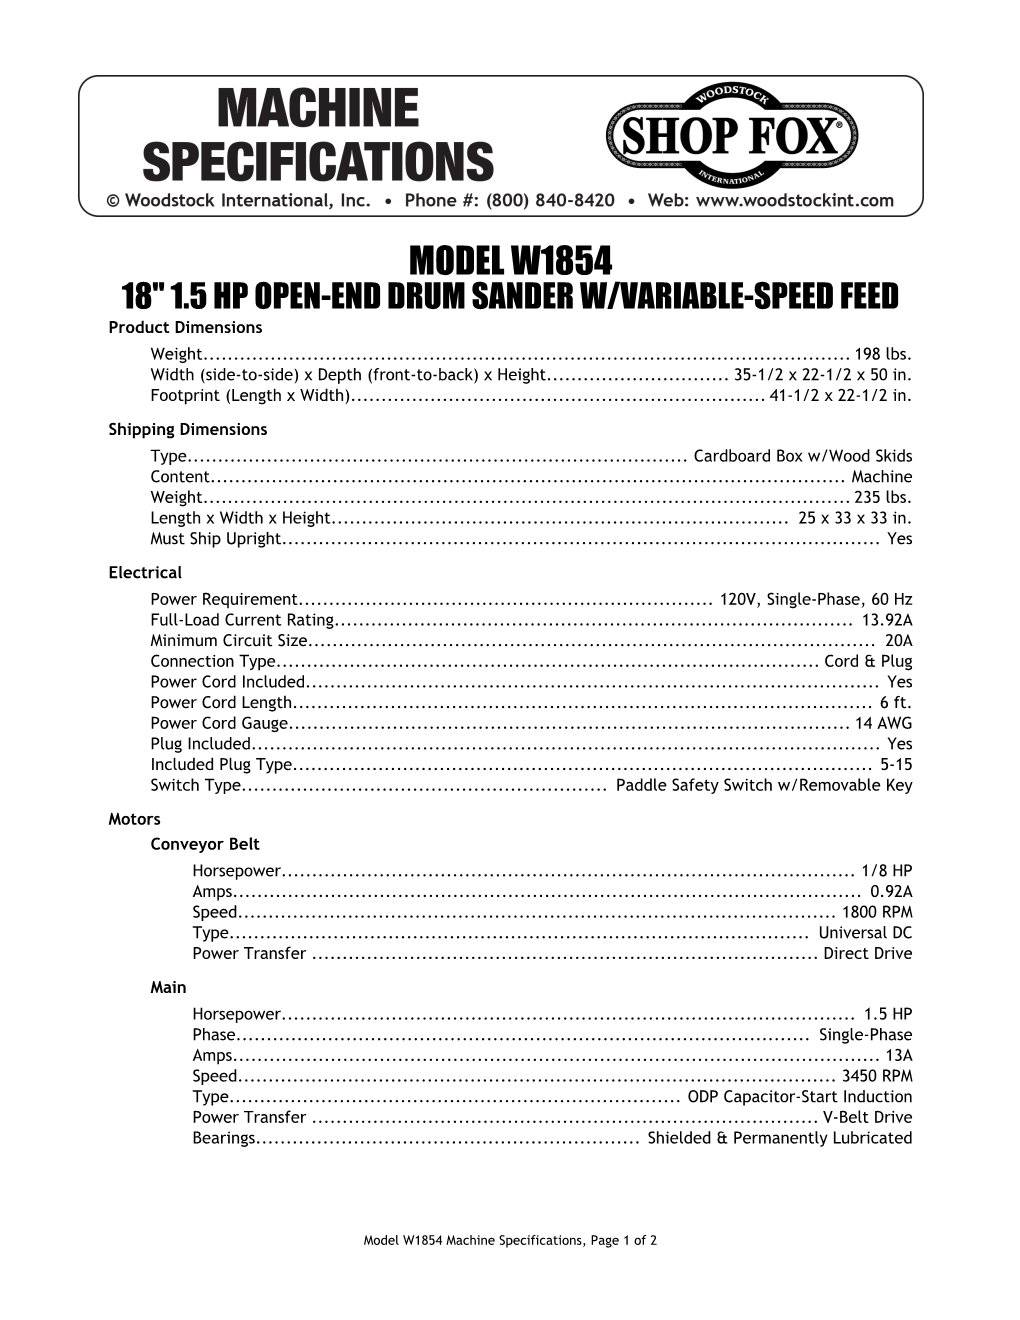 W1854 Specifications Sheet